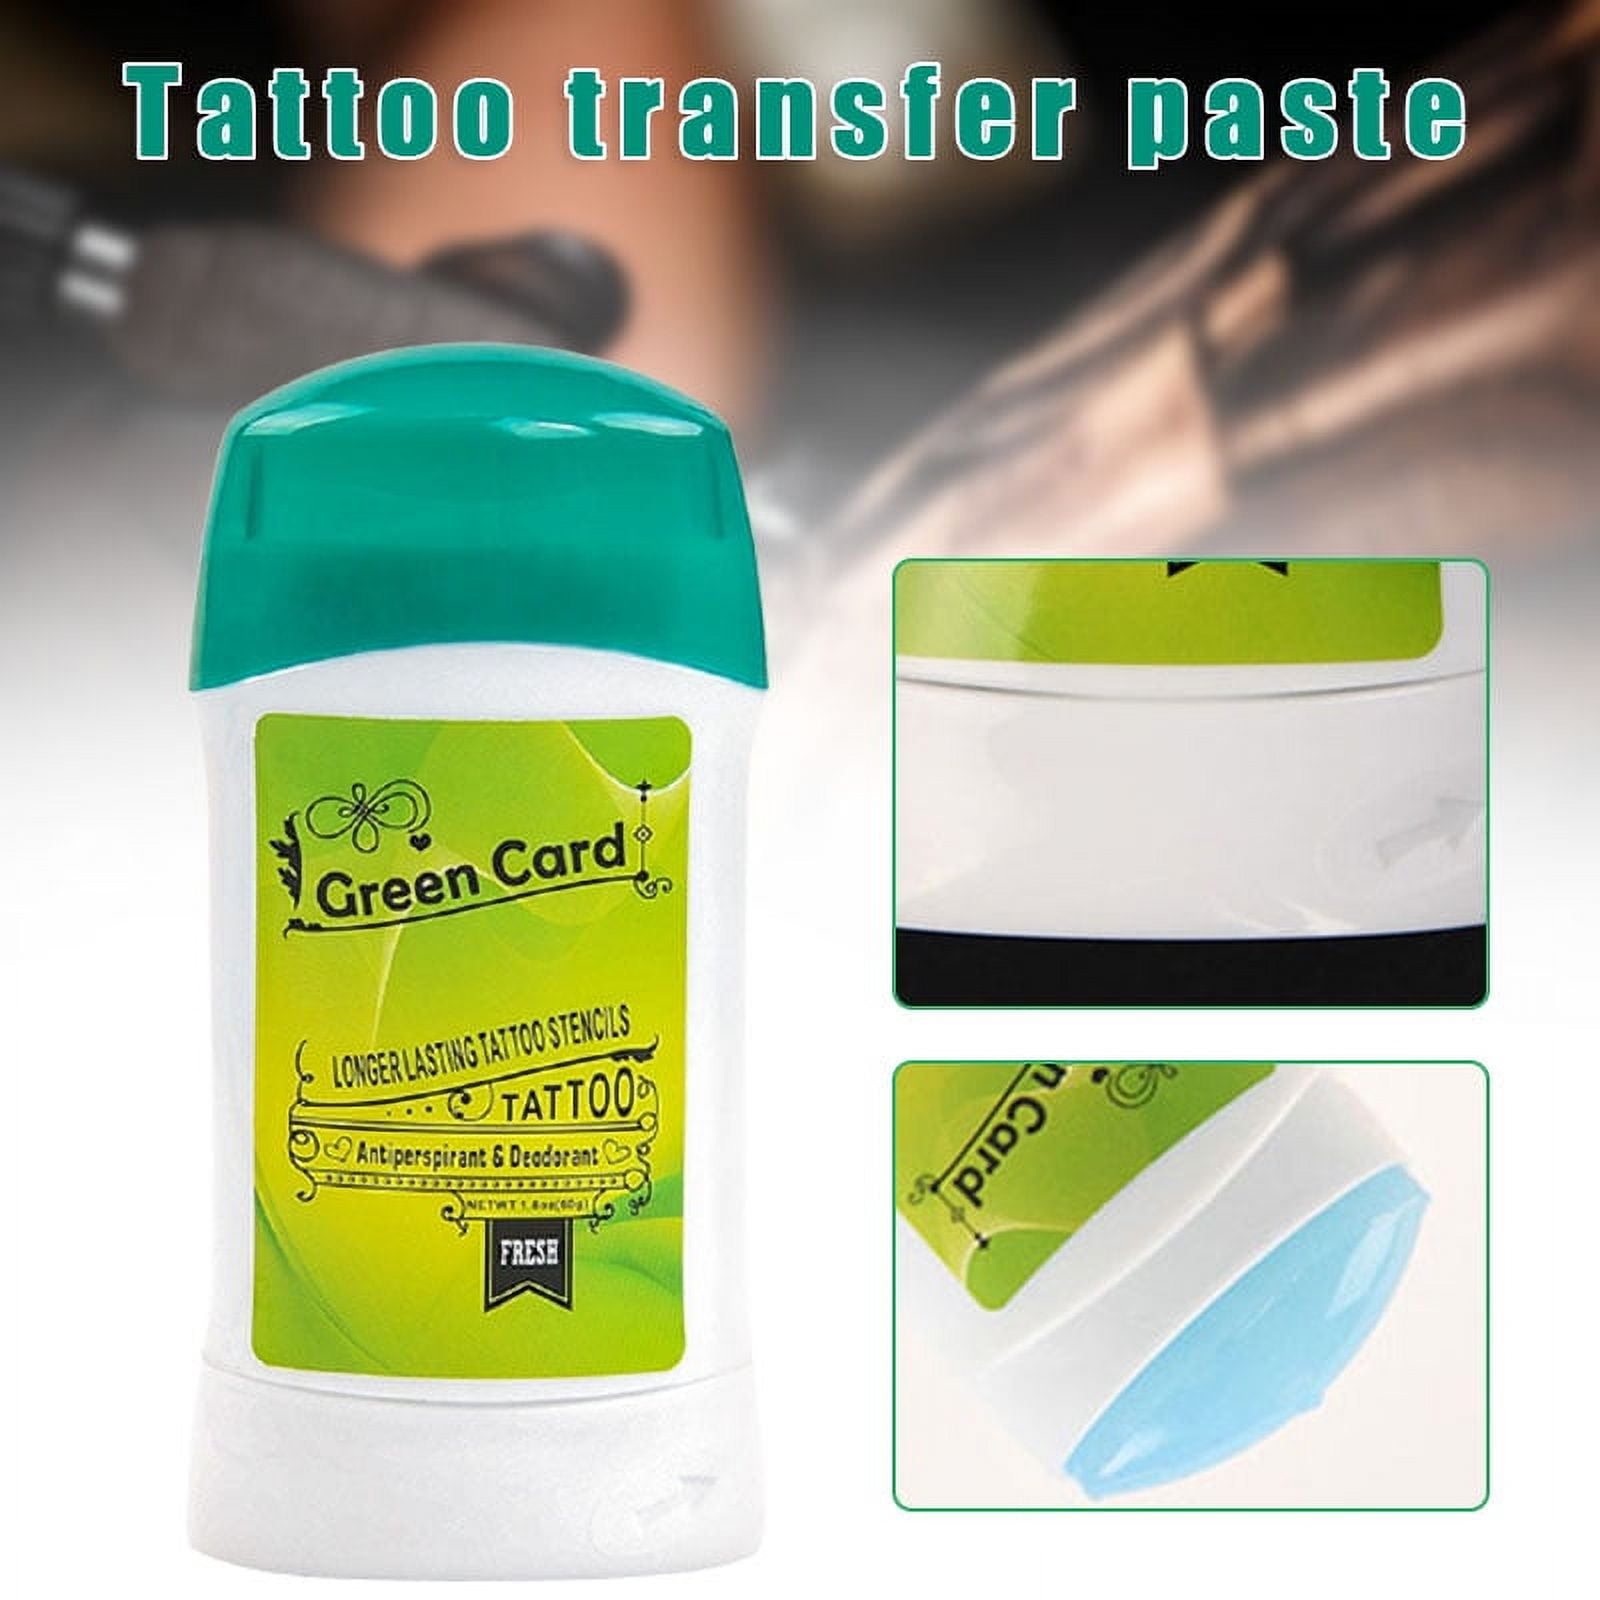 Healeved Tattoo Transfer Paper and Gel 1 Set Tattoo Transfer Cream